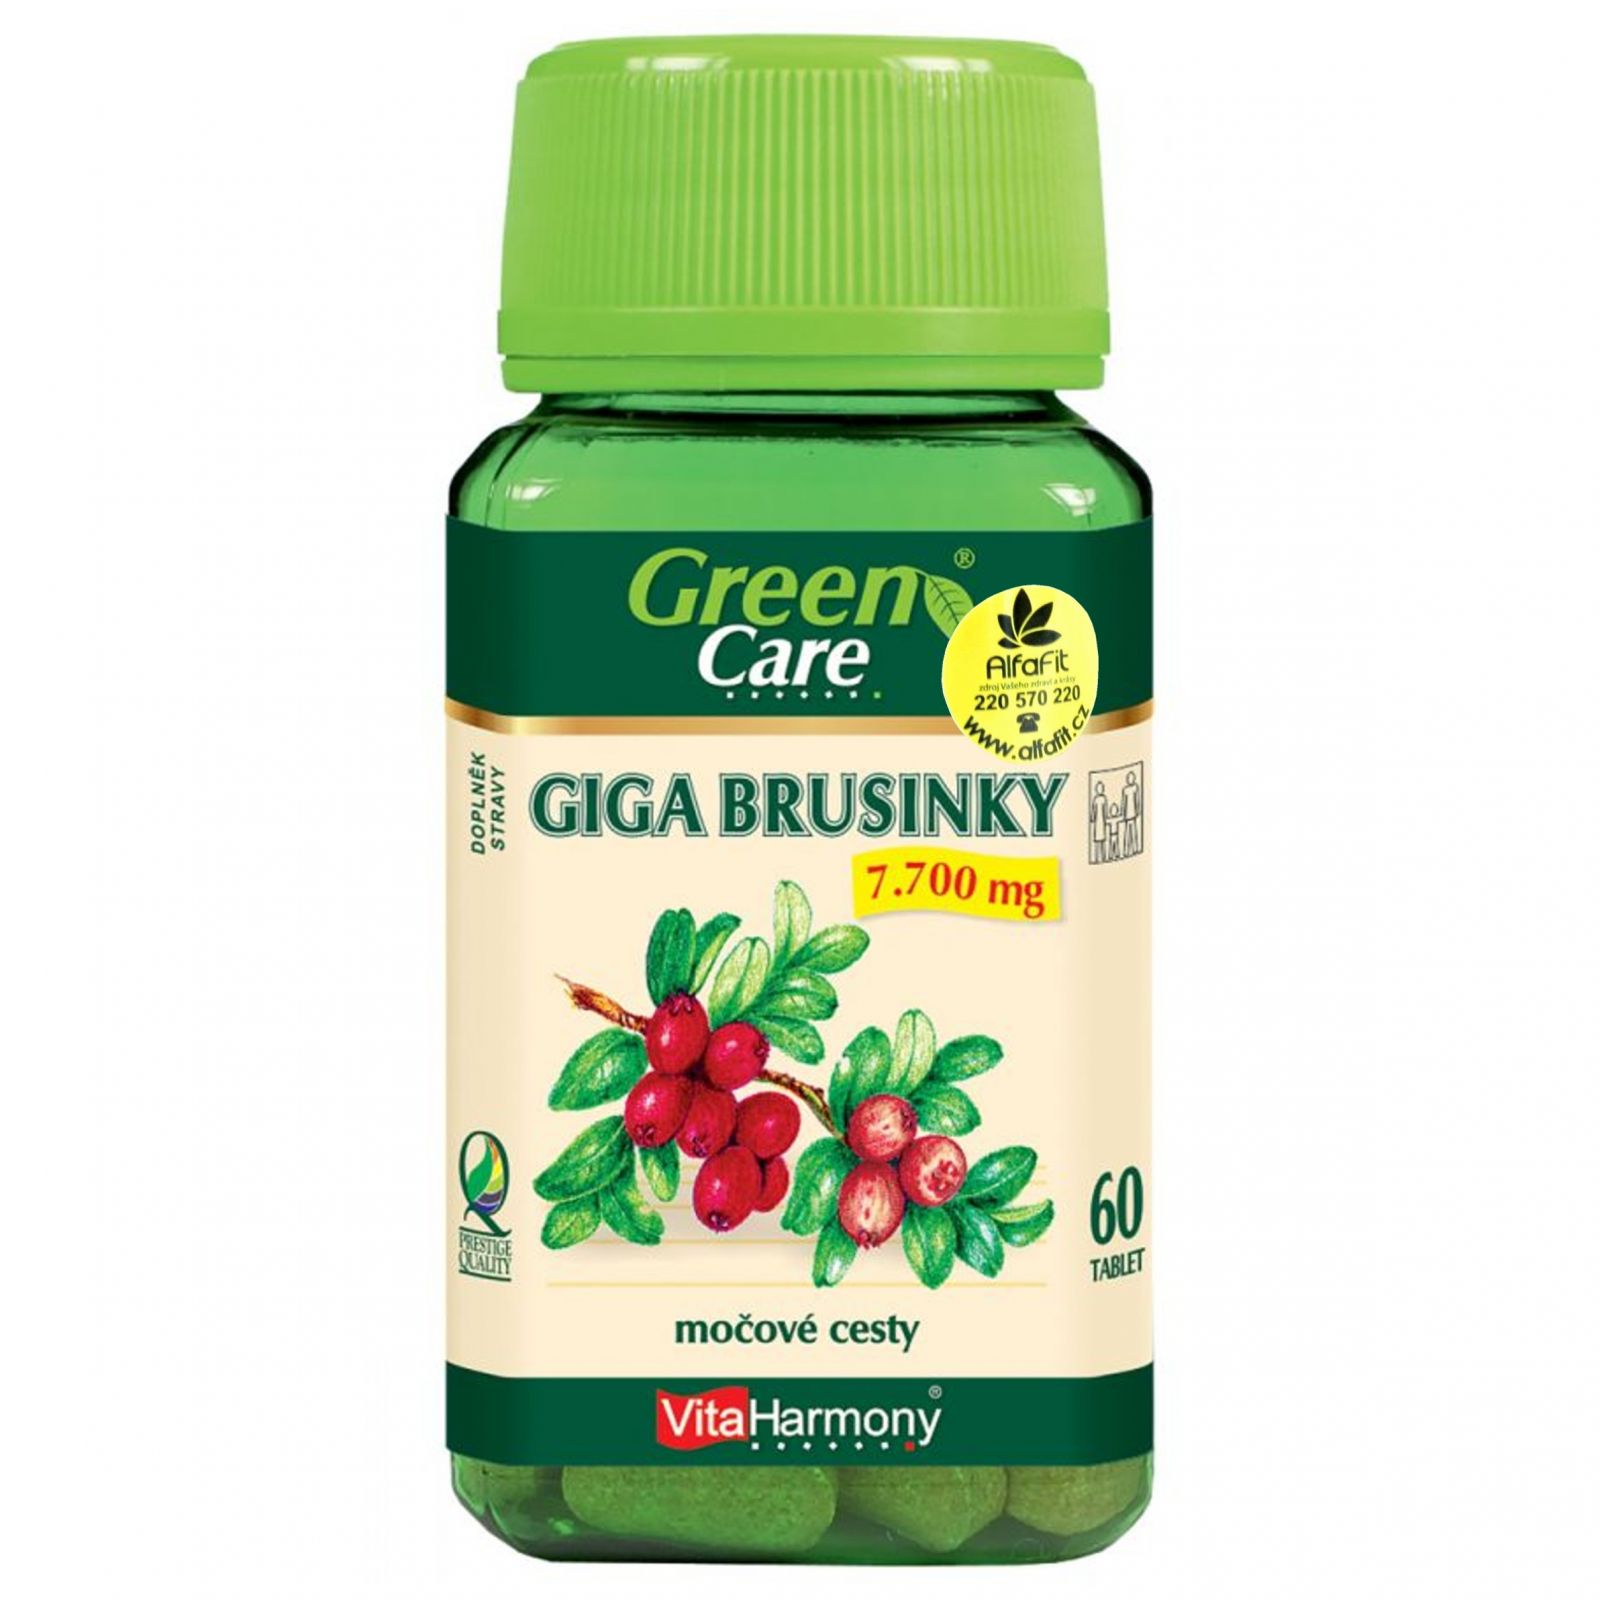  VitaHarmony Giga brusinky 7700 mg - 60 tablet